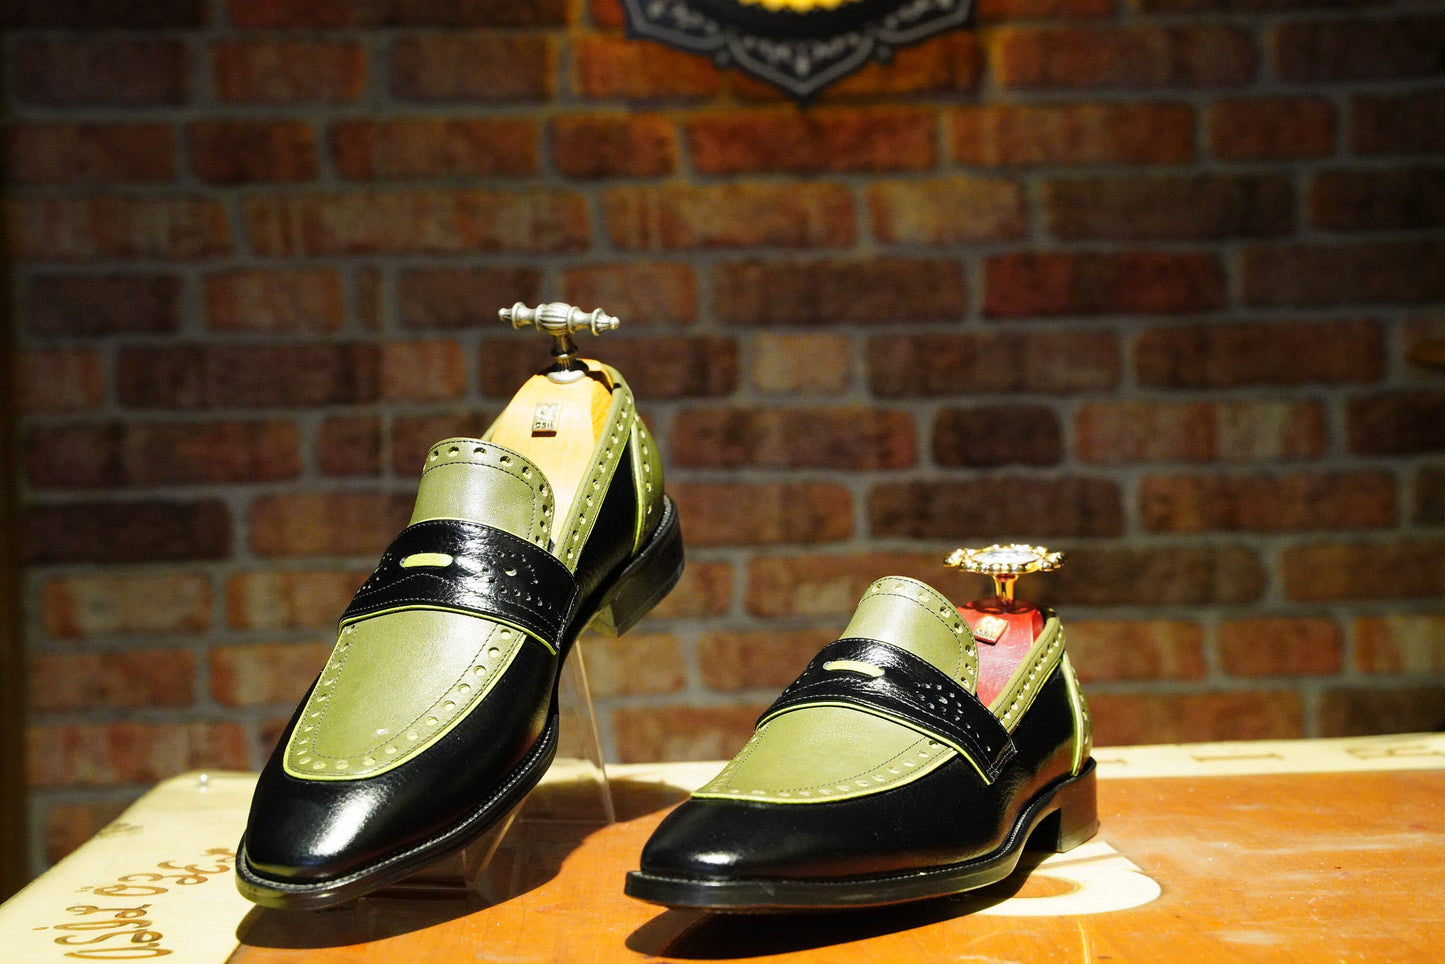 Black Brown Slip On Loafers For Men Handmade Premiım Quality Genuine Leather Shoes Dress Shoes Platform loafers Luxury Slip Ons